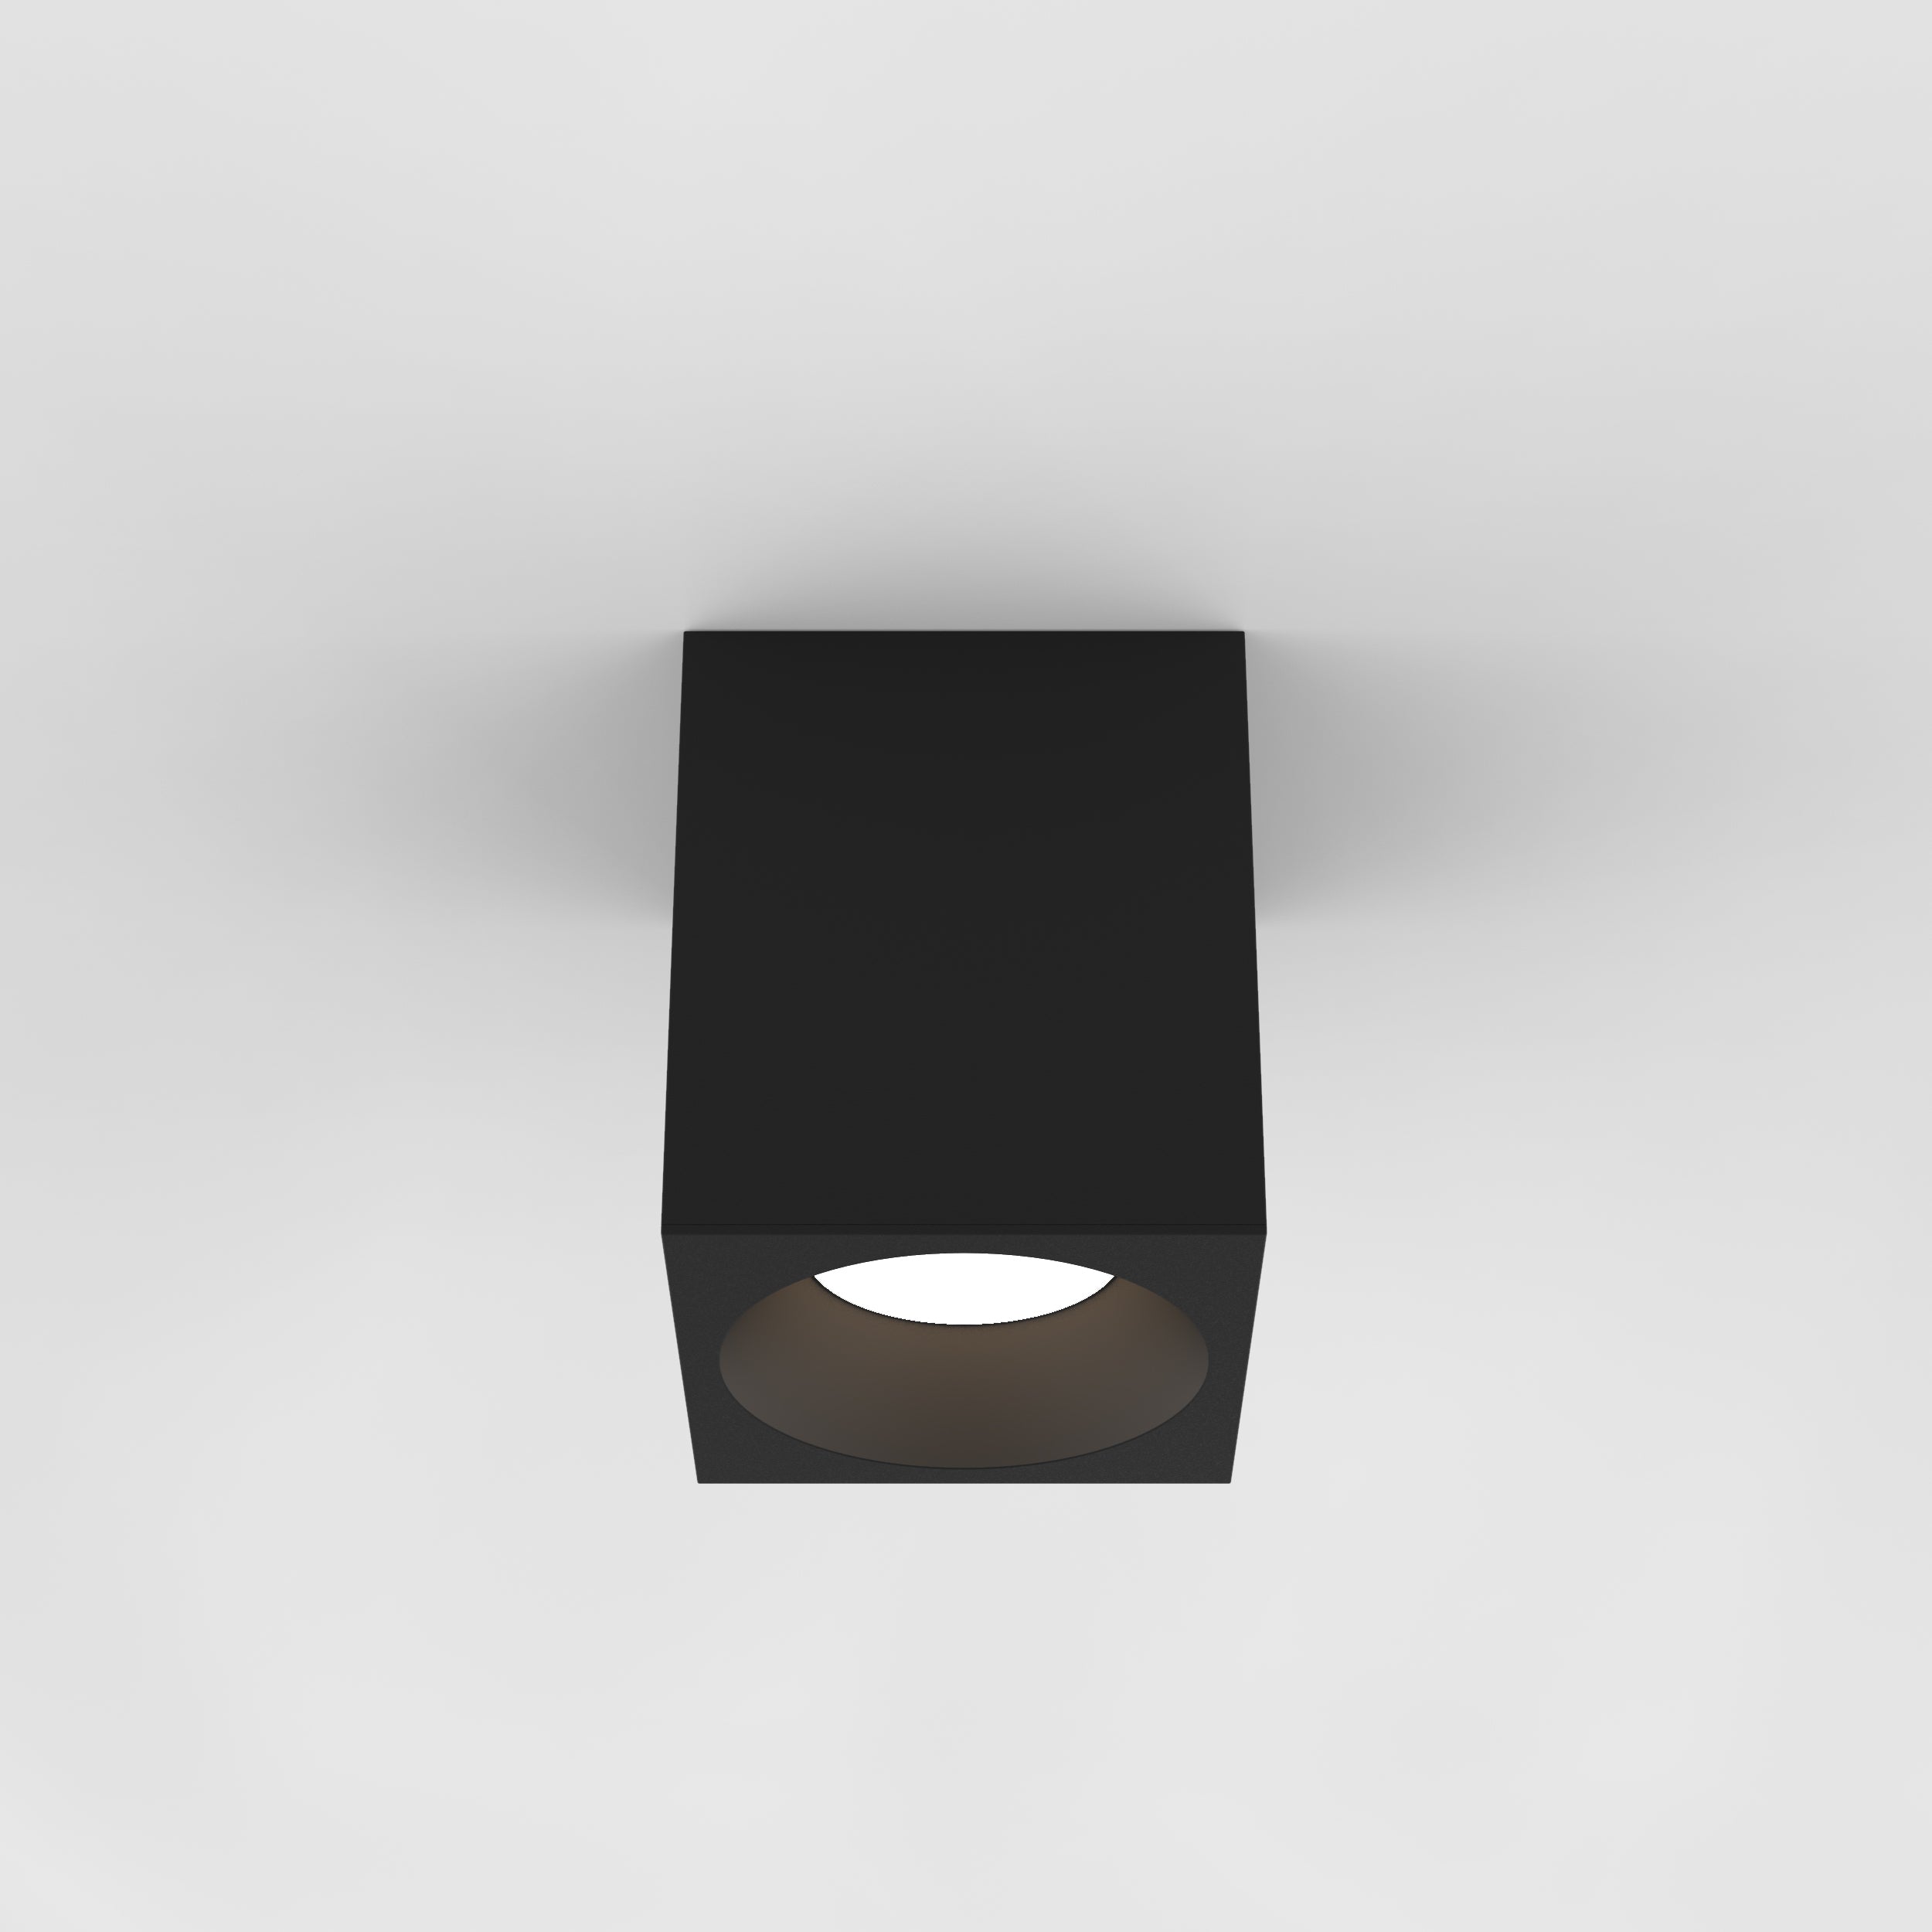 Astro Lighting Kos Square Recessed Astro Lighting 4.53x4.53x5.59 Textured Black Yes (Integral), AC LED Module